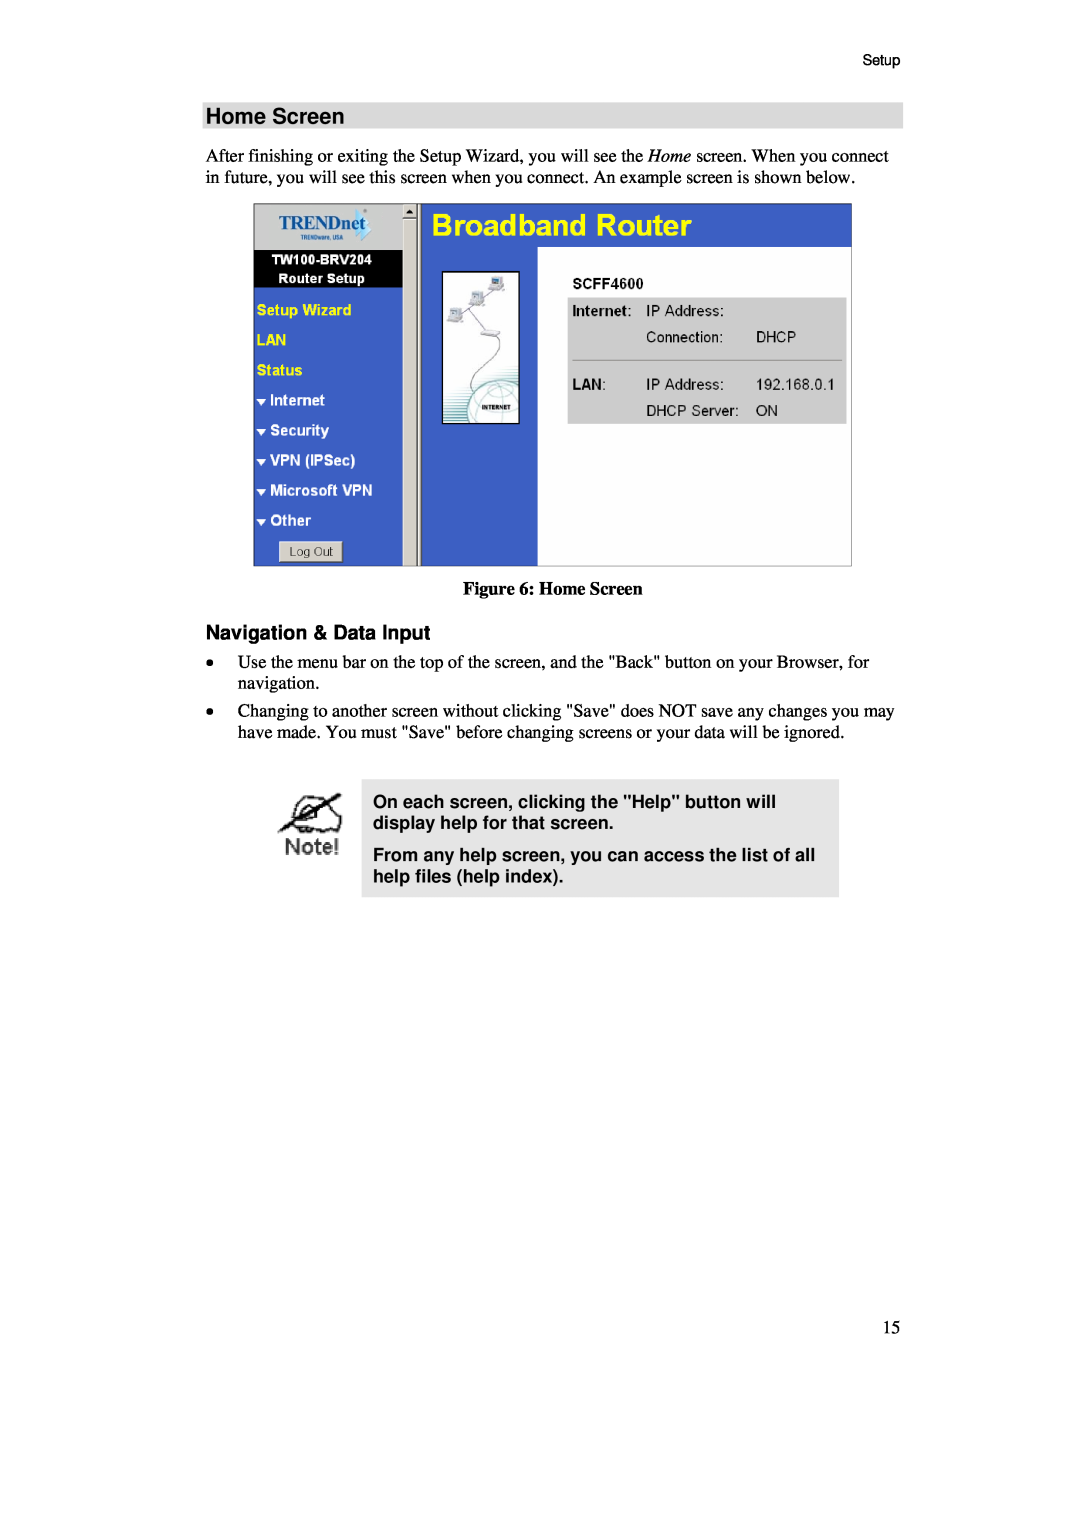 TRENDnet BRV204 manual Home Screen, Navigation & Data Input 